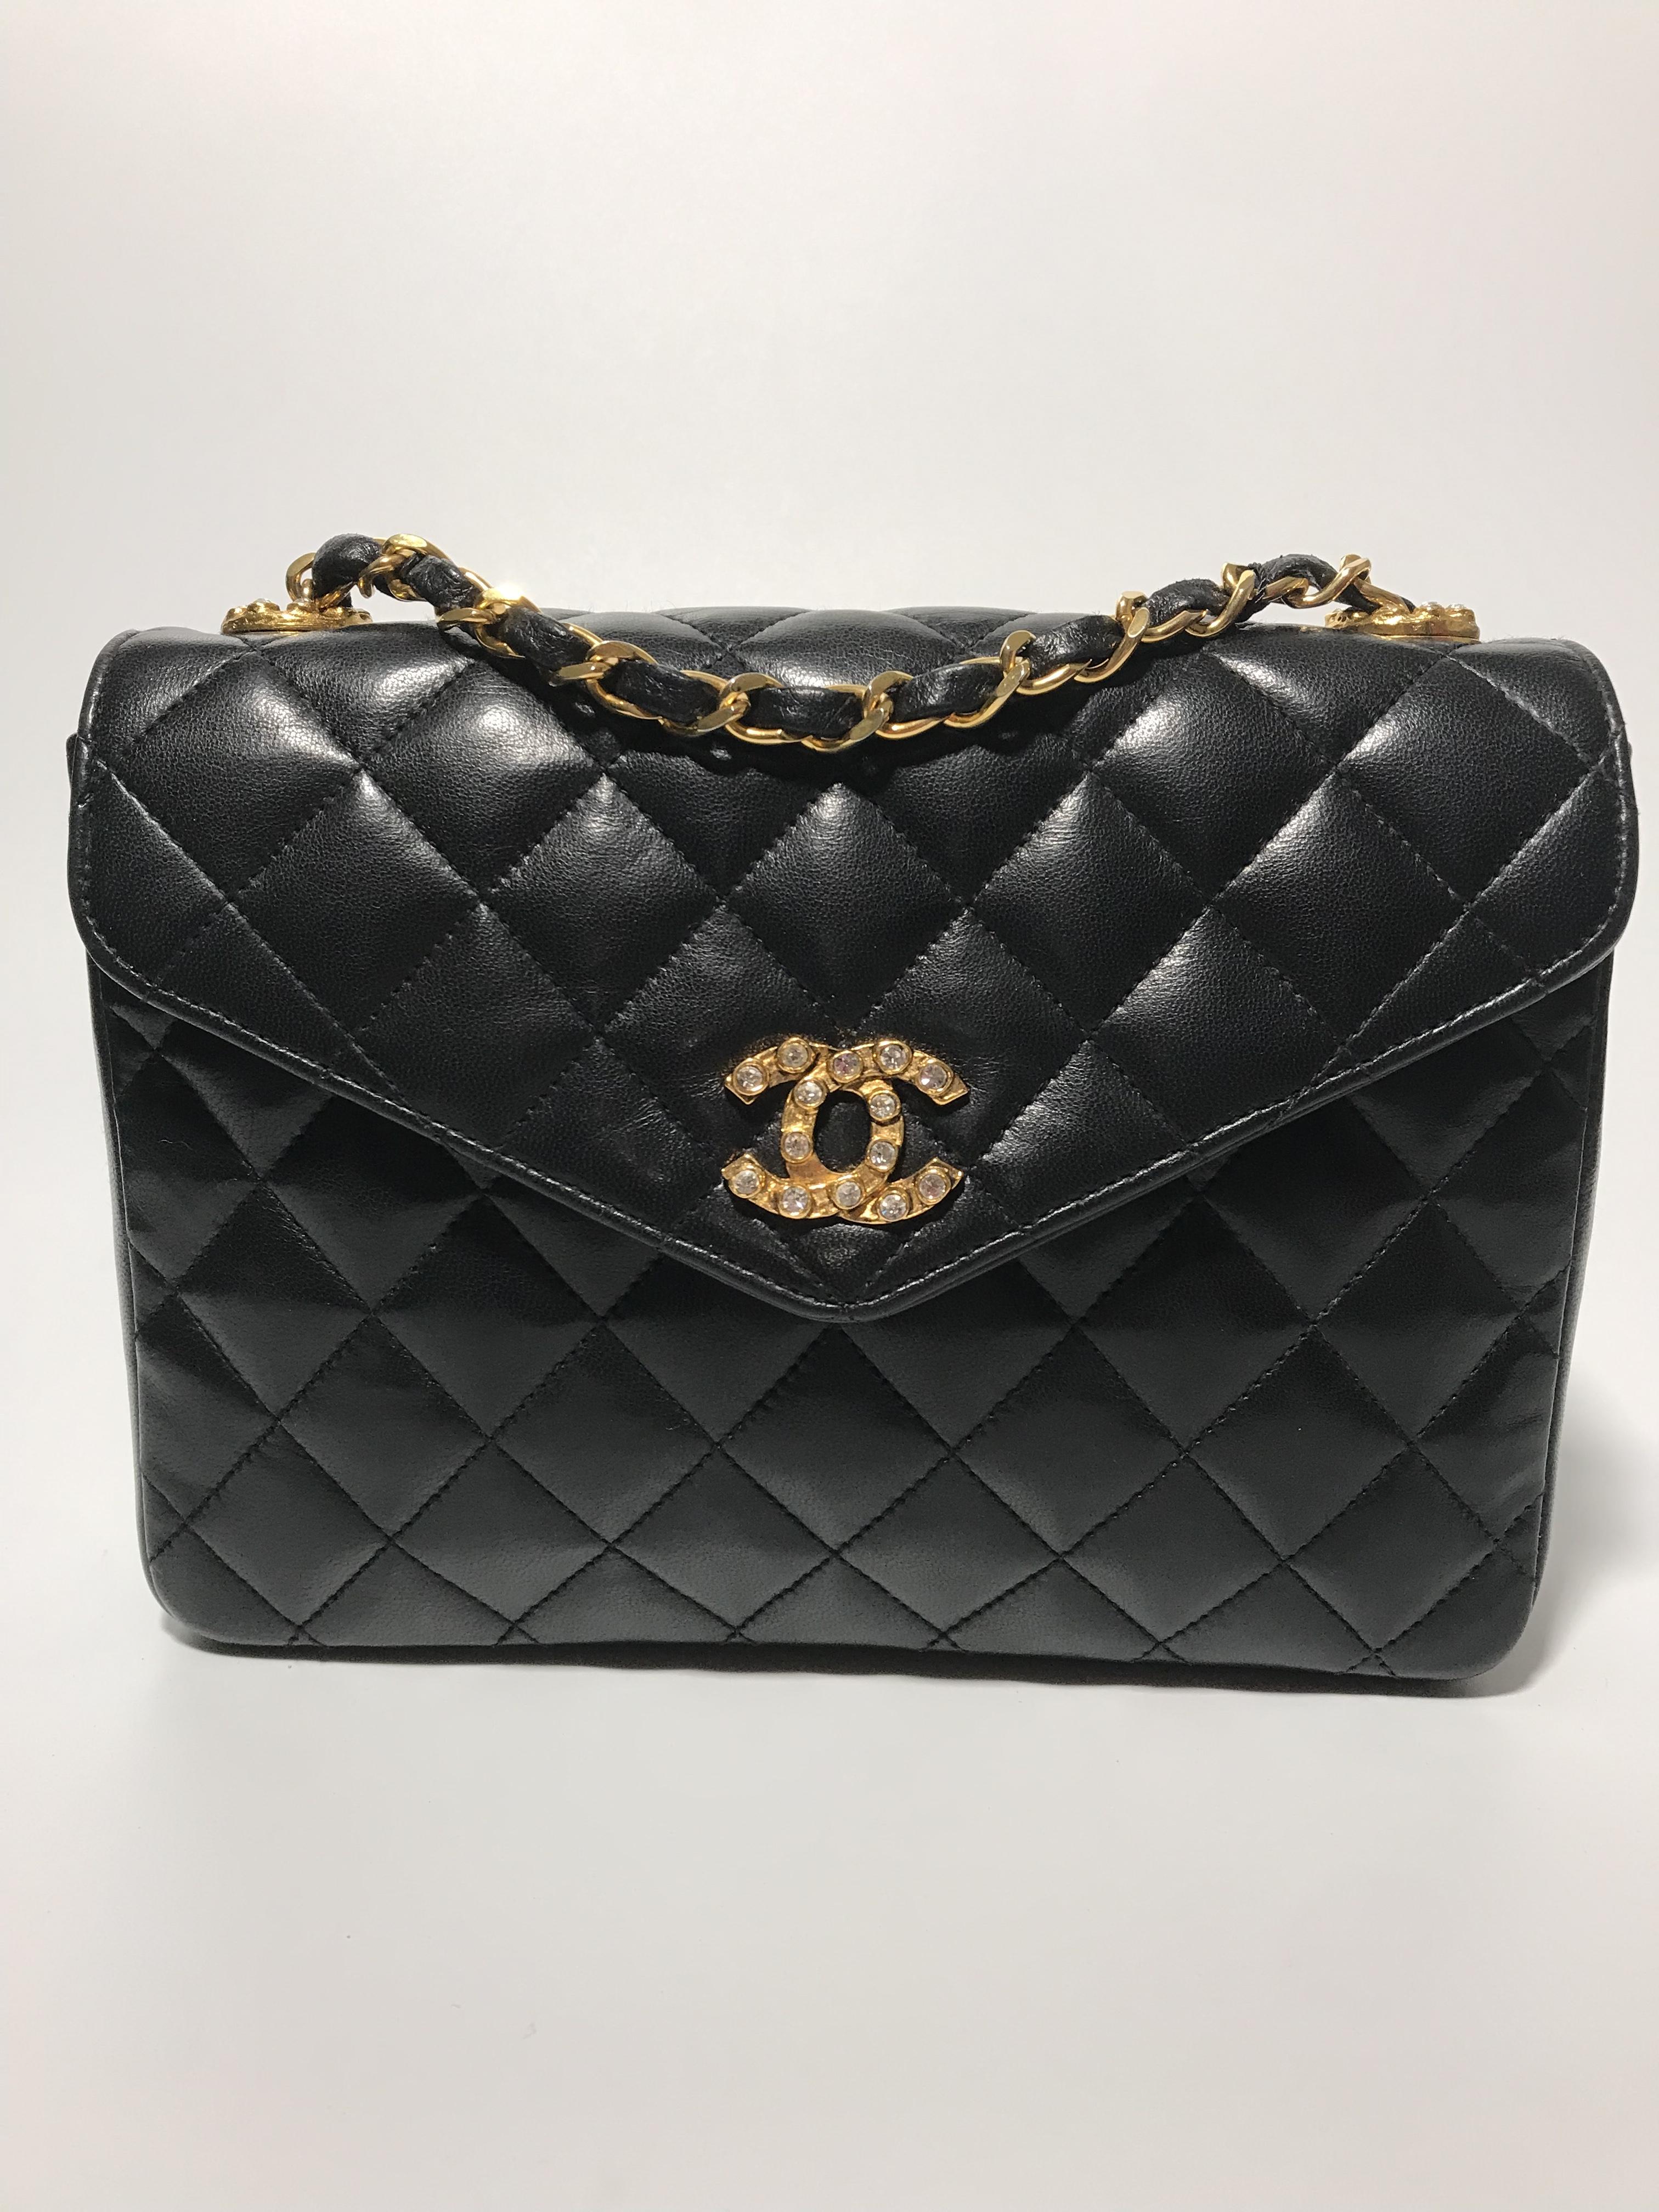 Chanel 鑽石釦信封包| Chanel - Fashion vintage house